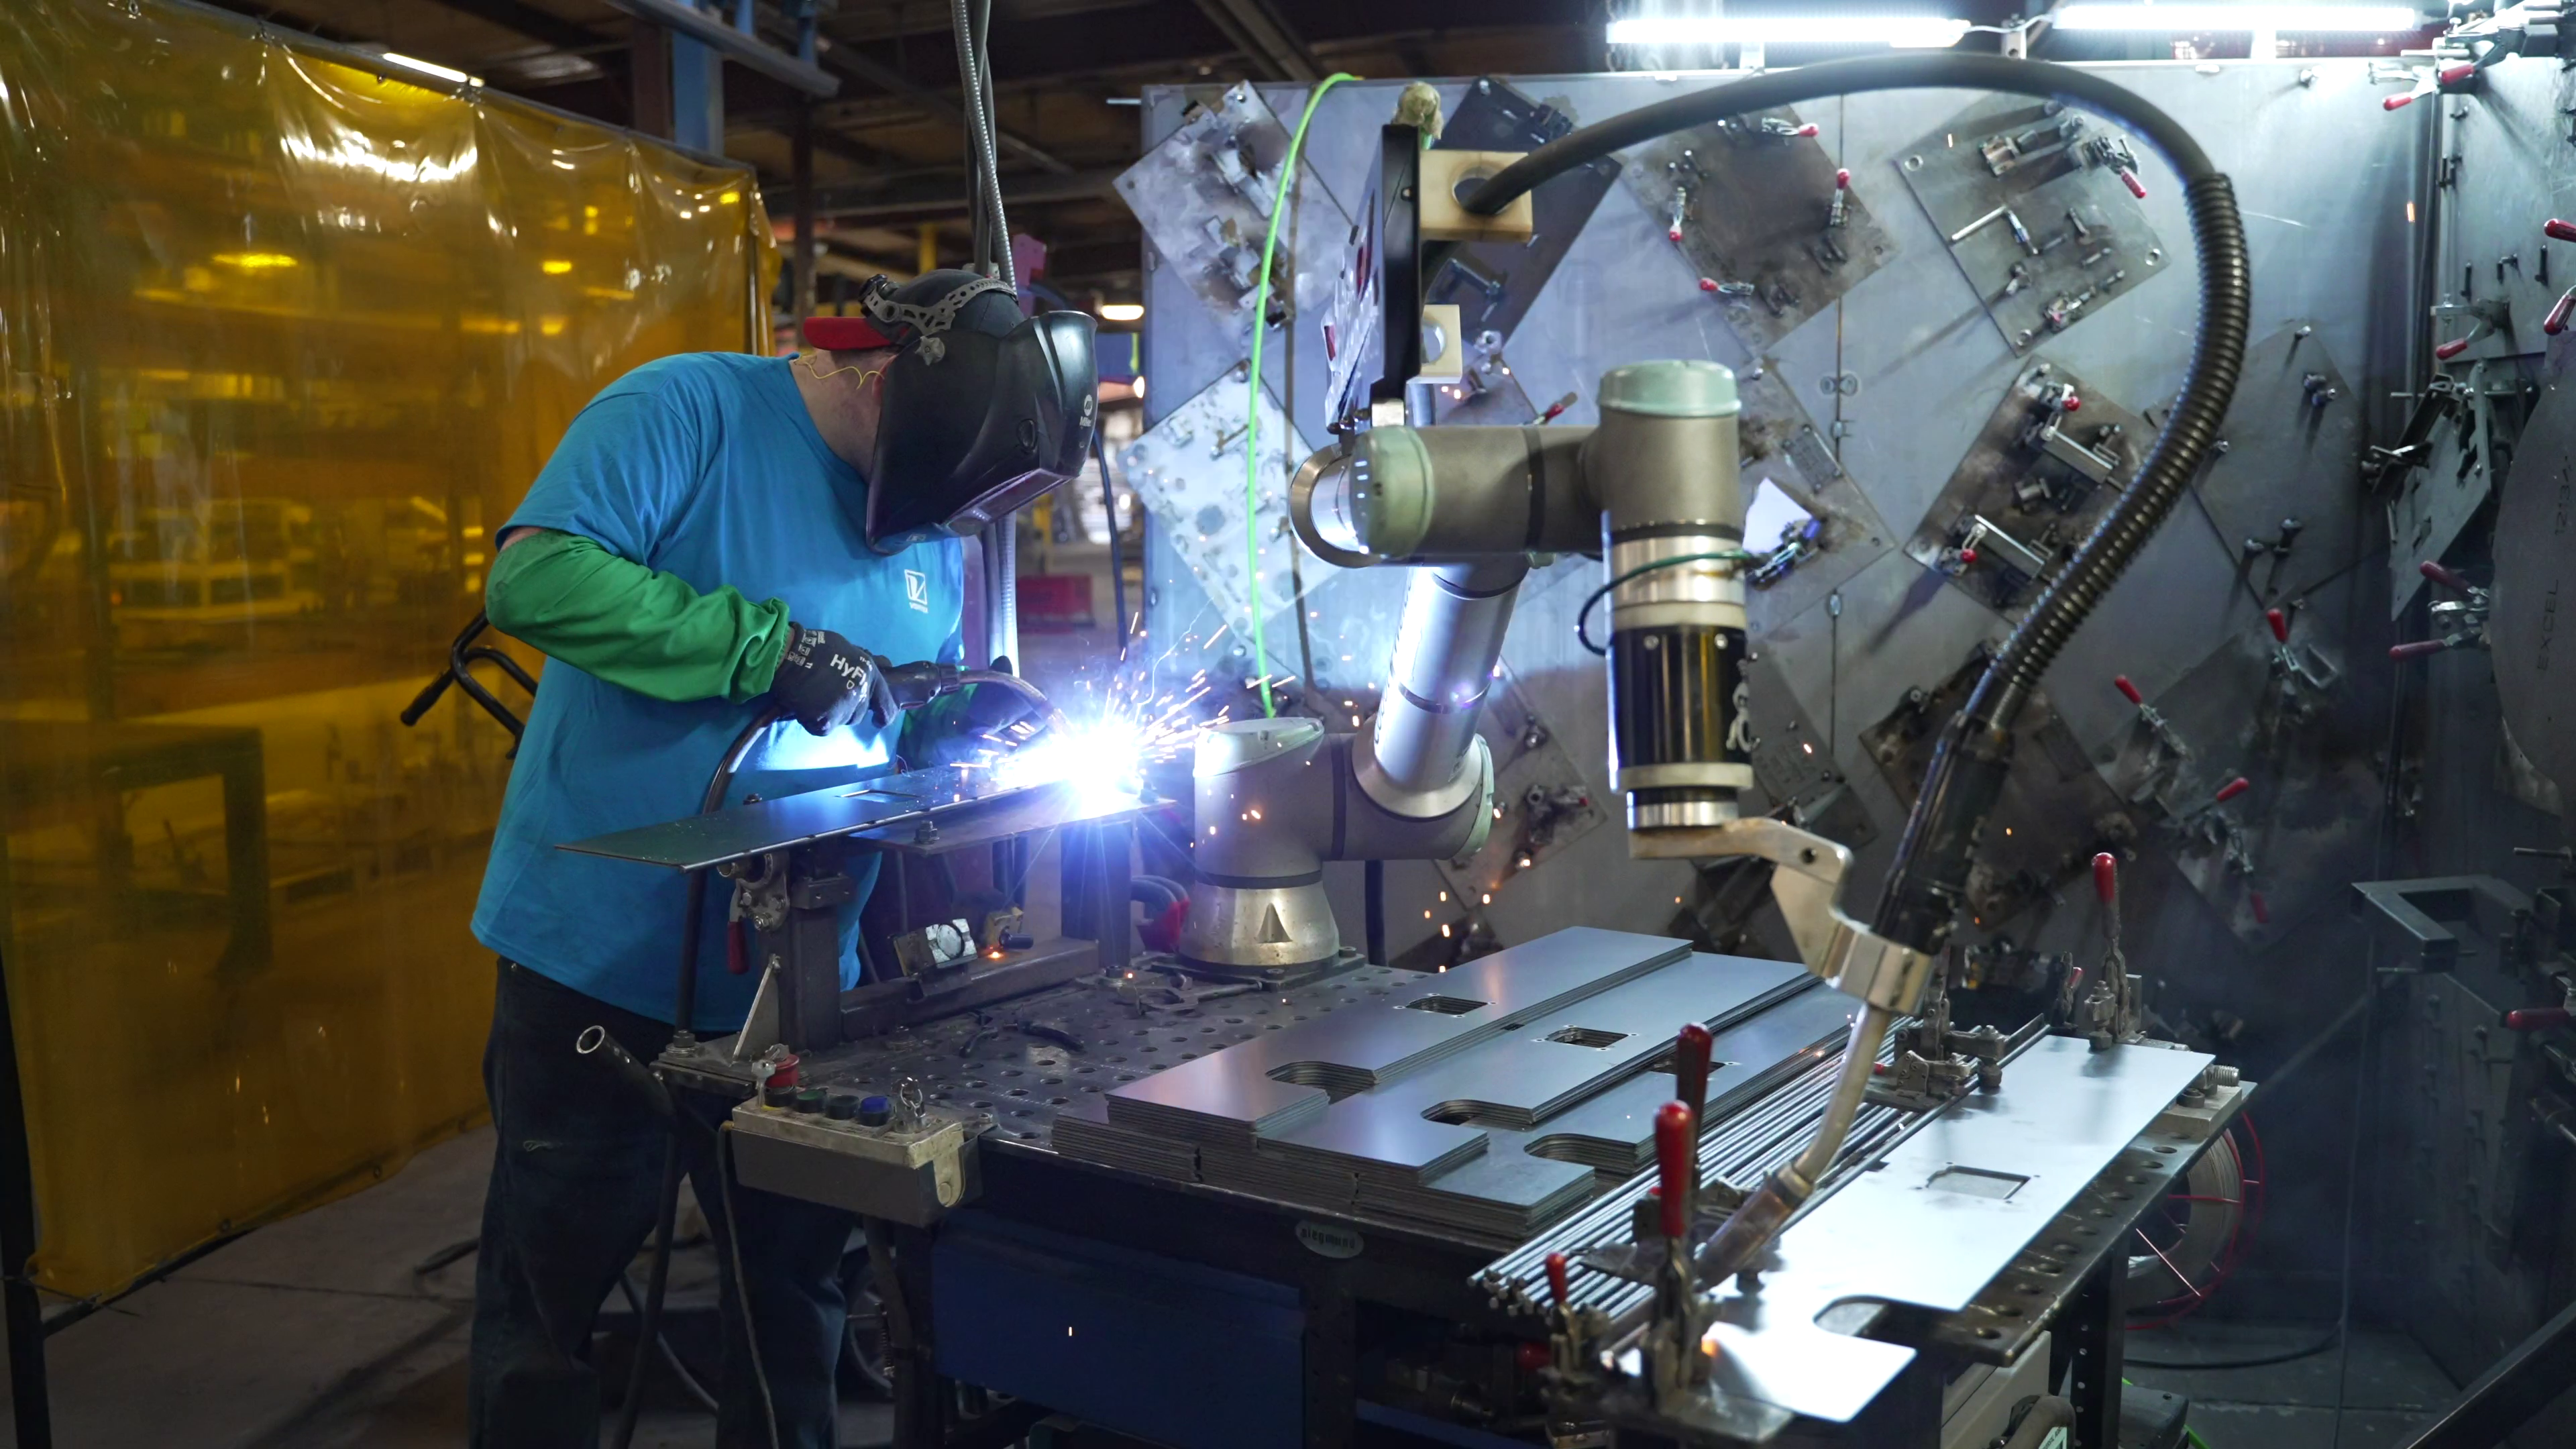 A robotic welder operator in action beside a collaborative welding robot